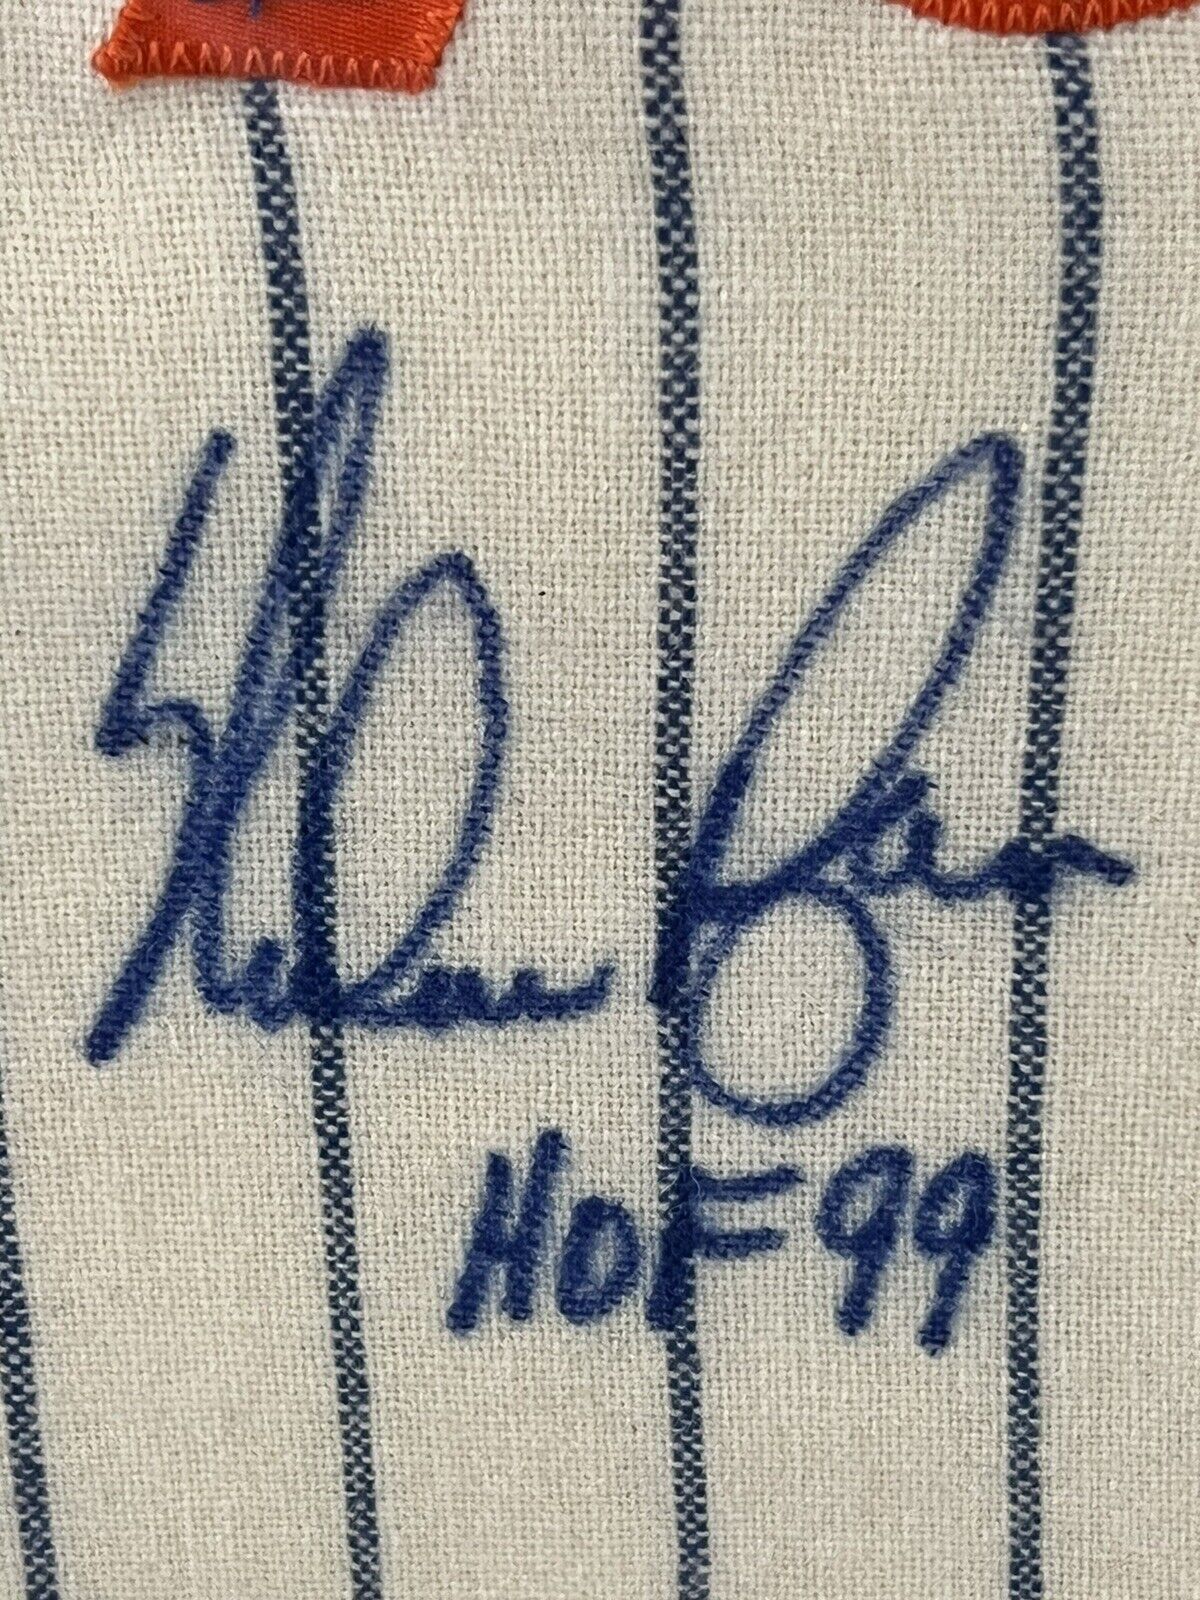 Nolan Ryan NY Mets 1969 Signed HOF 99 Auto M& Ness Jersey Framed